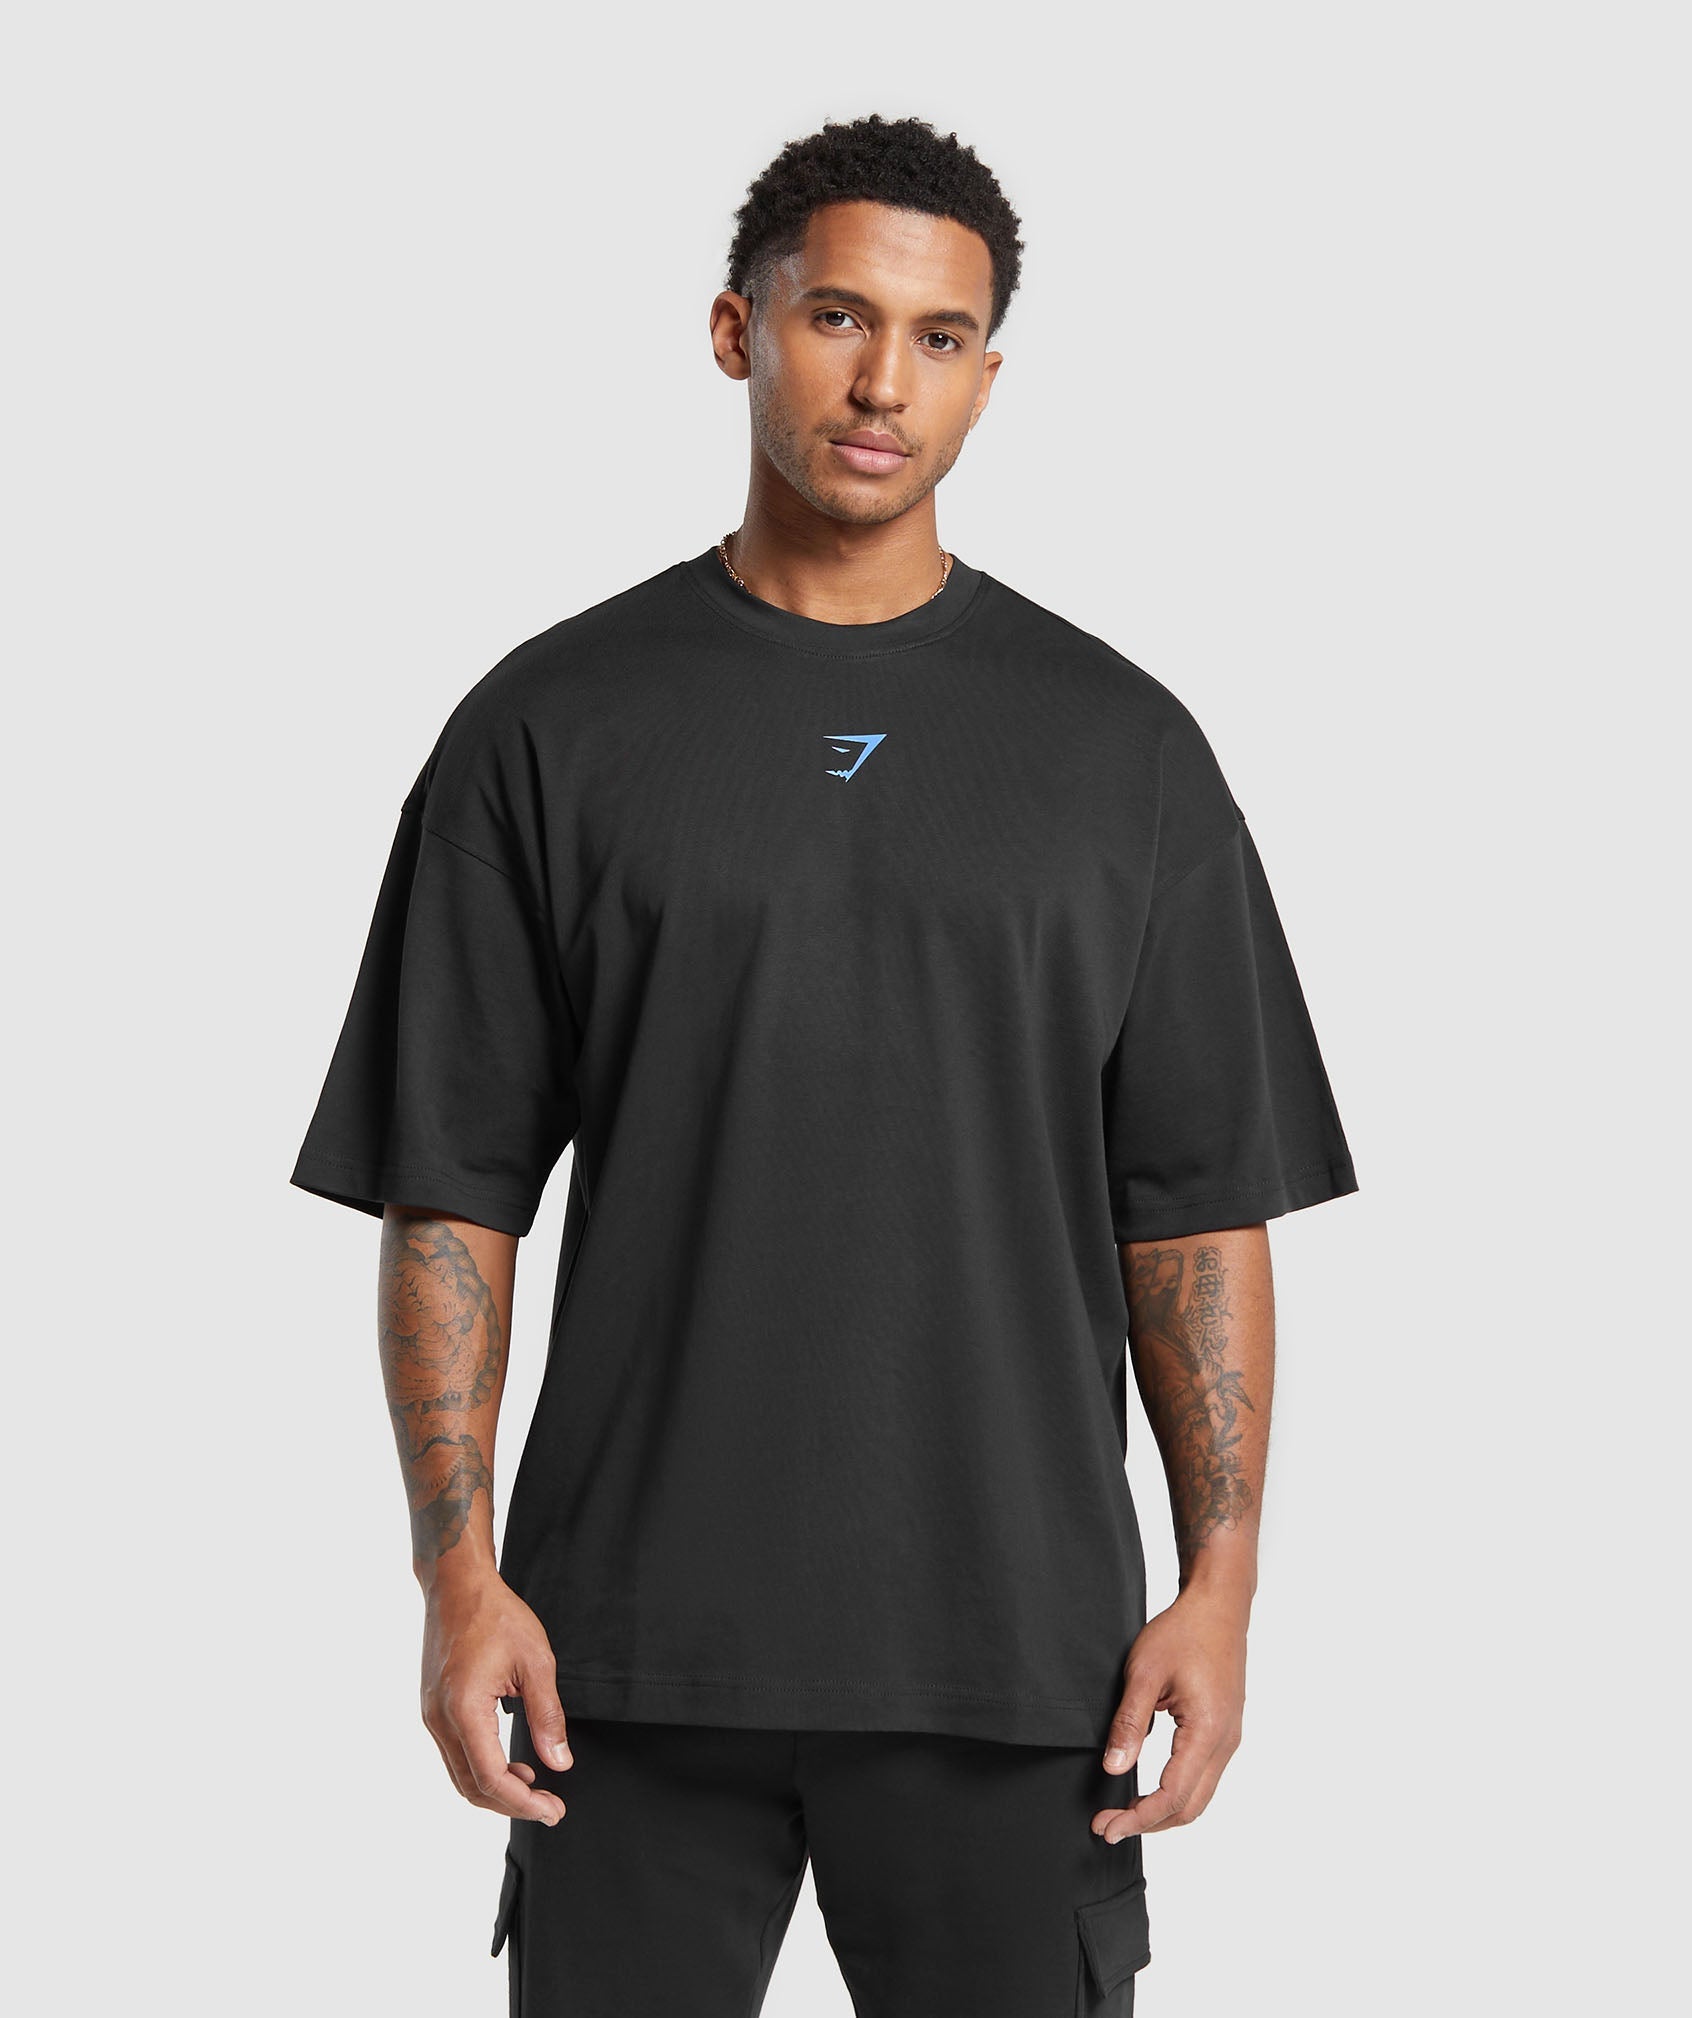 Gymshark Miami Graphic T-Shirt - Black/Lats Blue